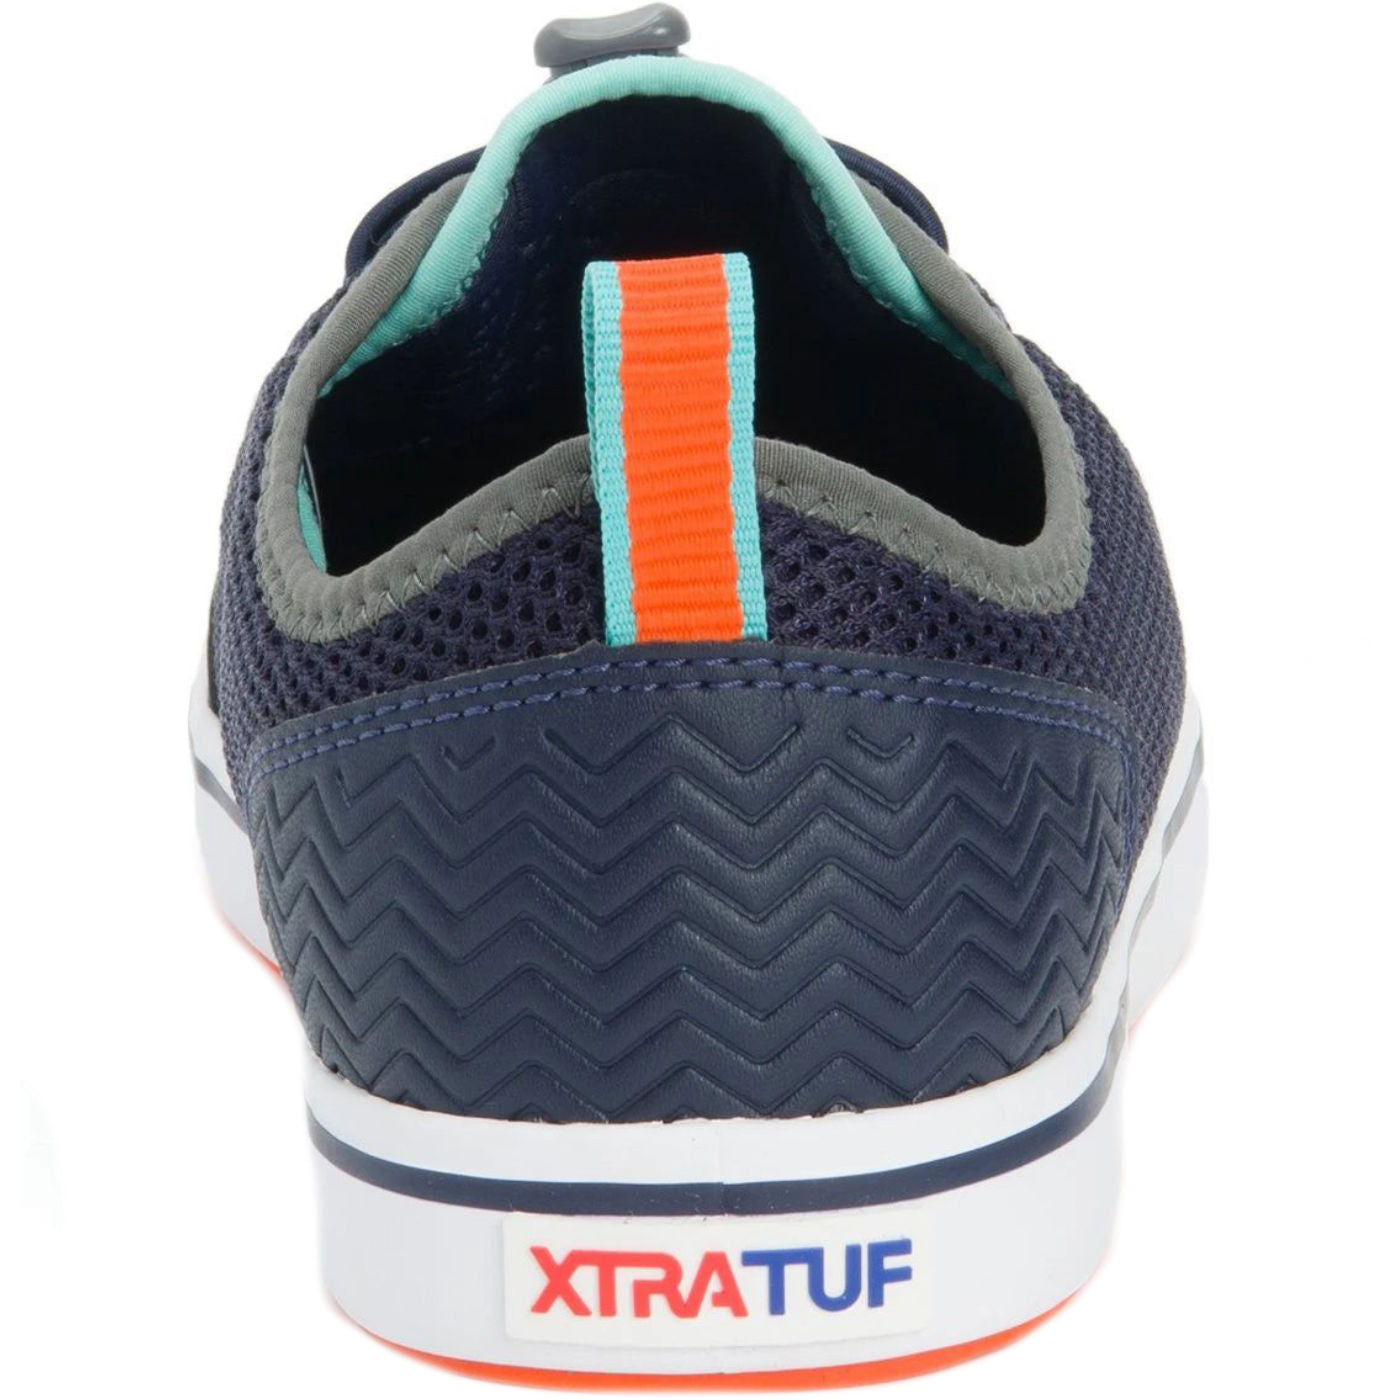 XTRATUF Men's Riptide Navy Water Shoes XMR201